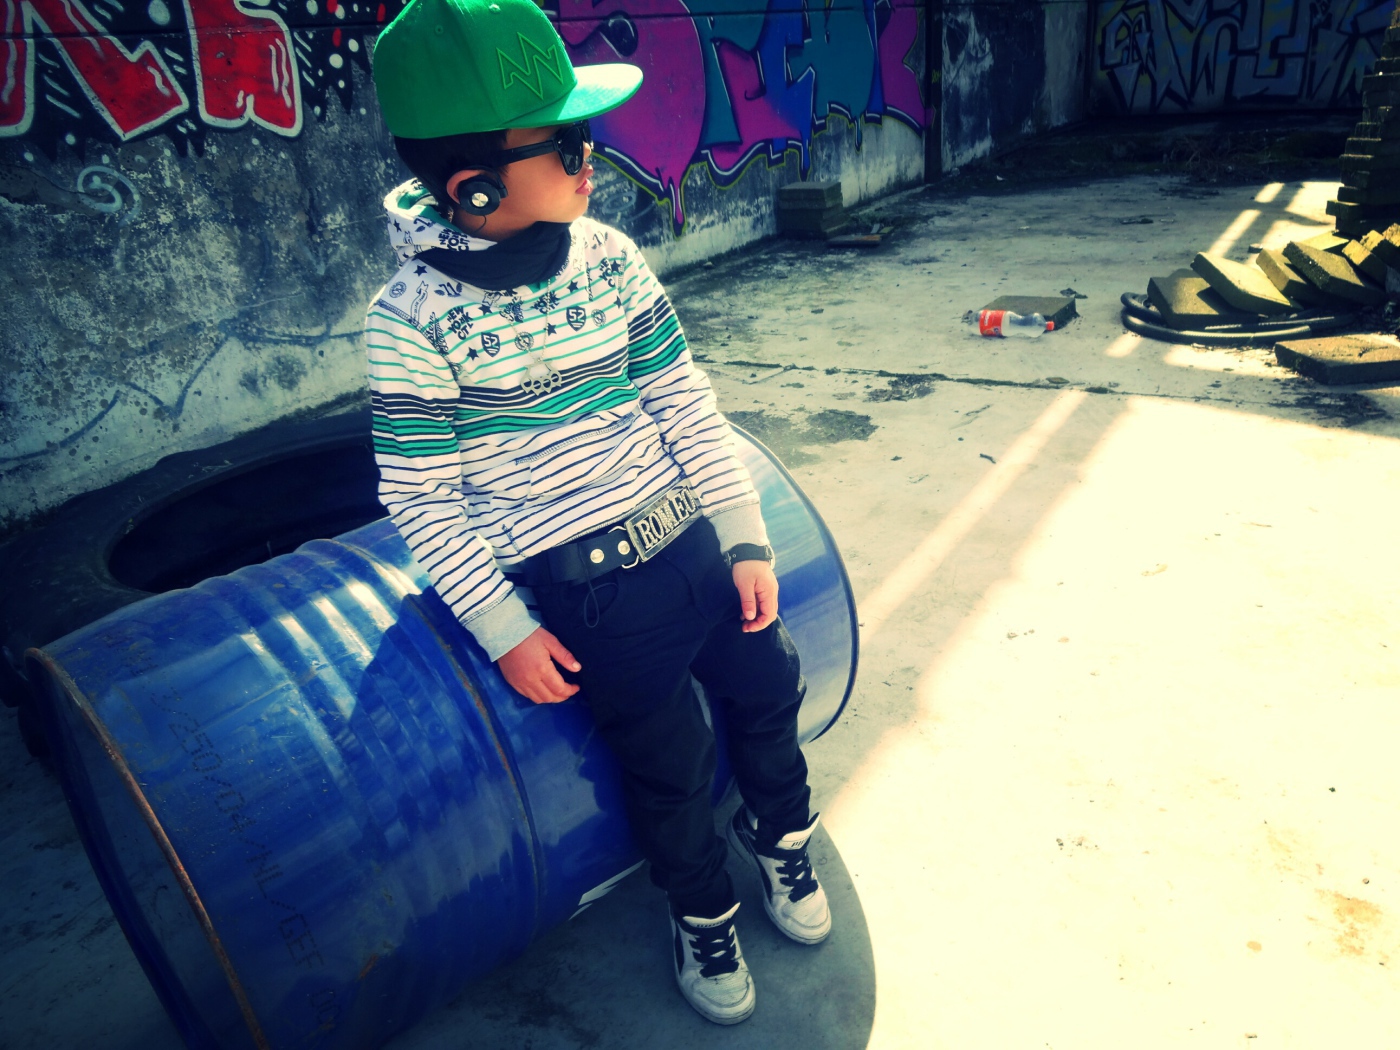 A boy in a green cap and barrel, swag